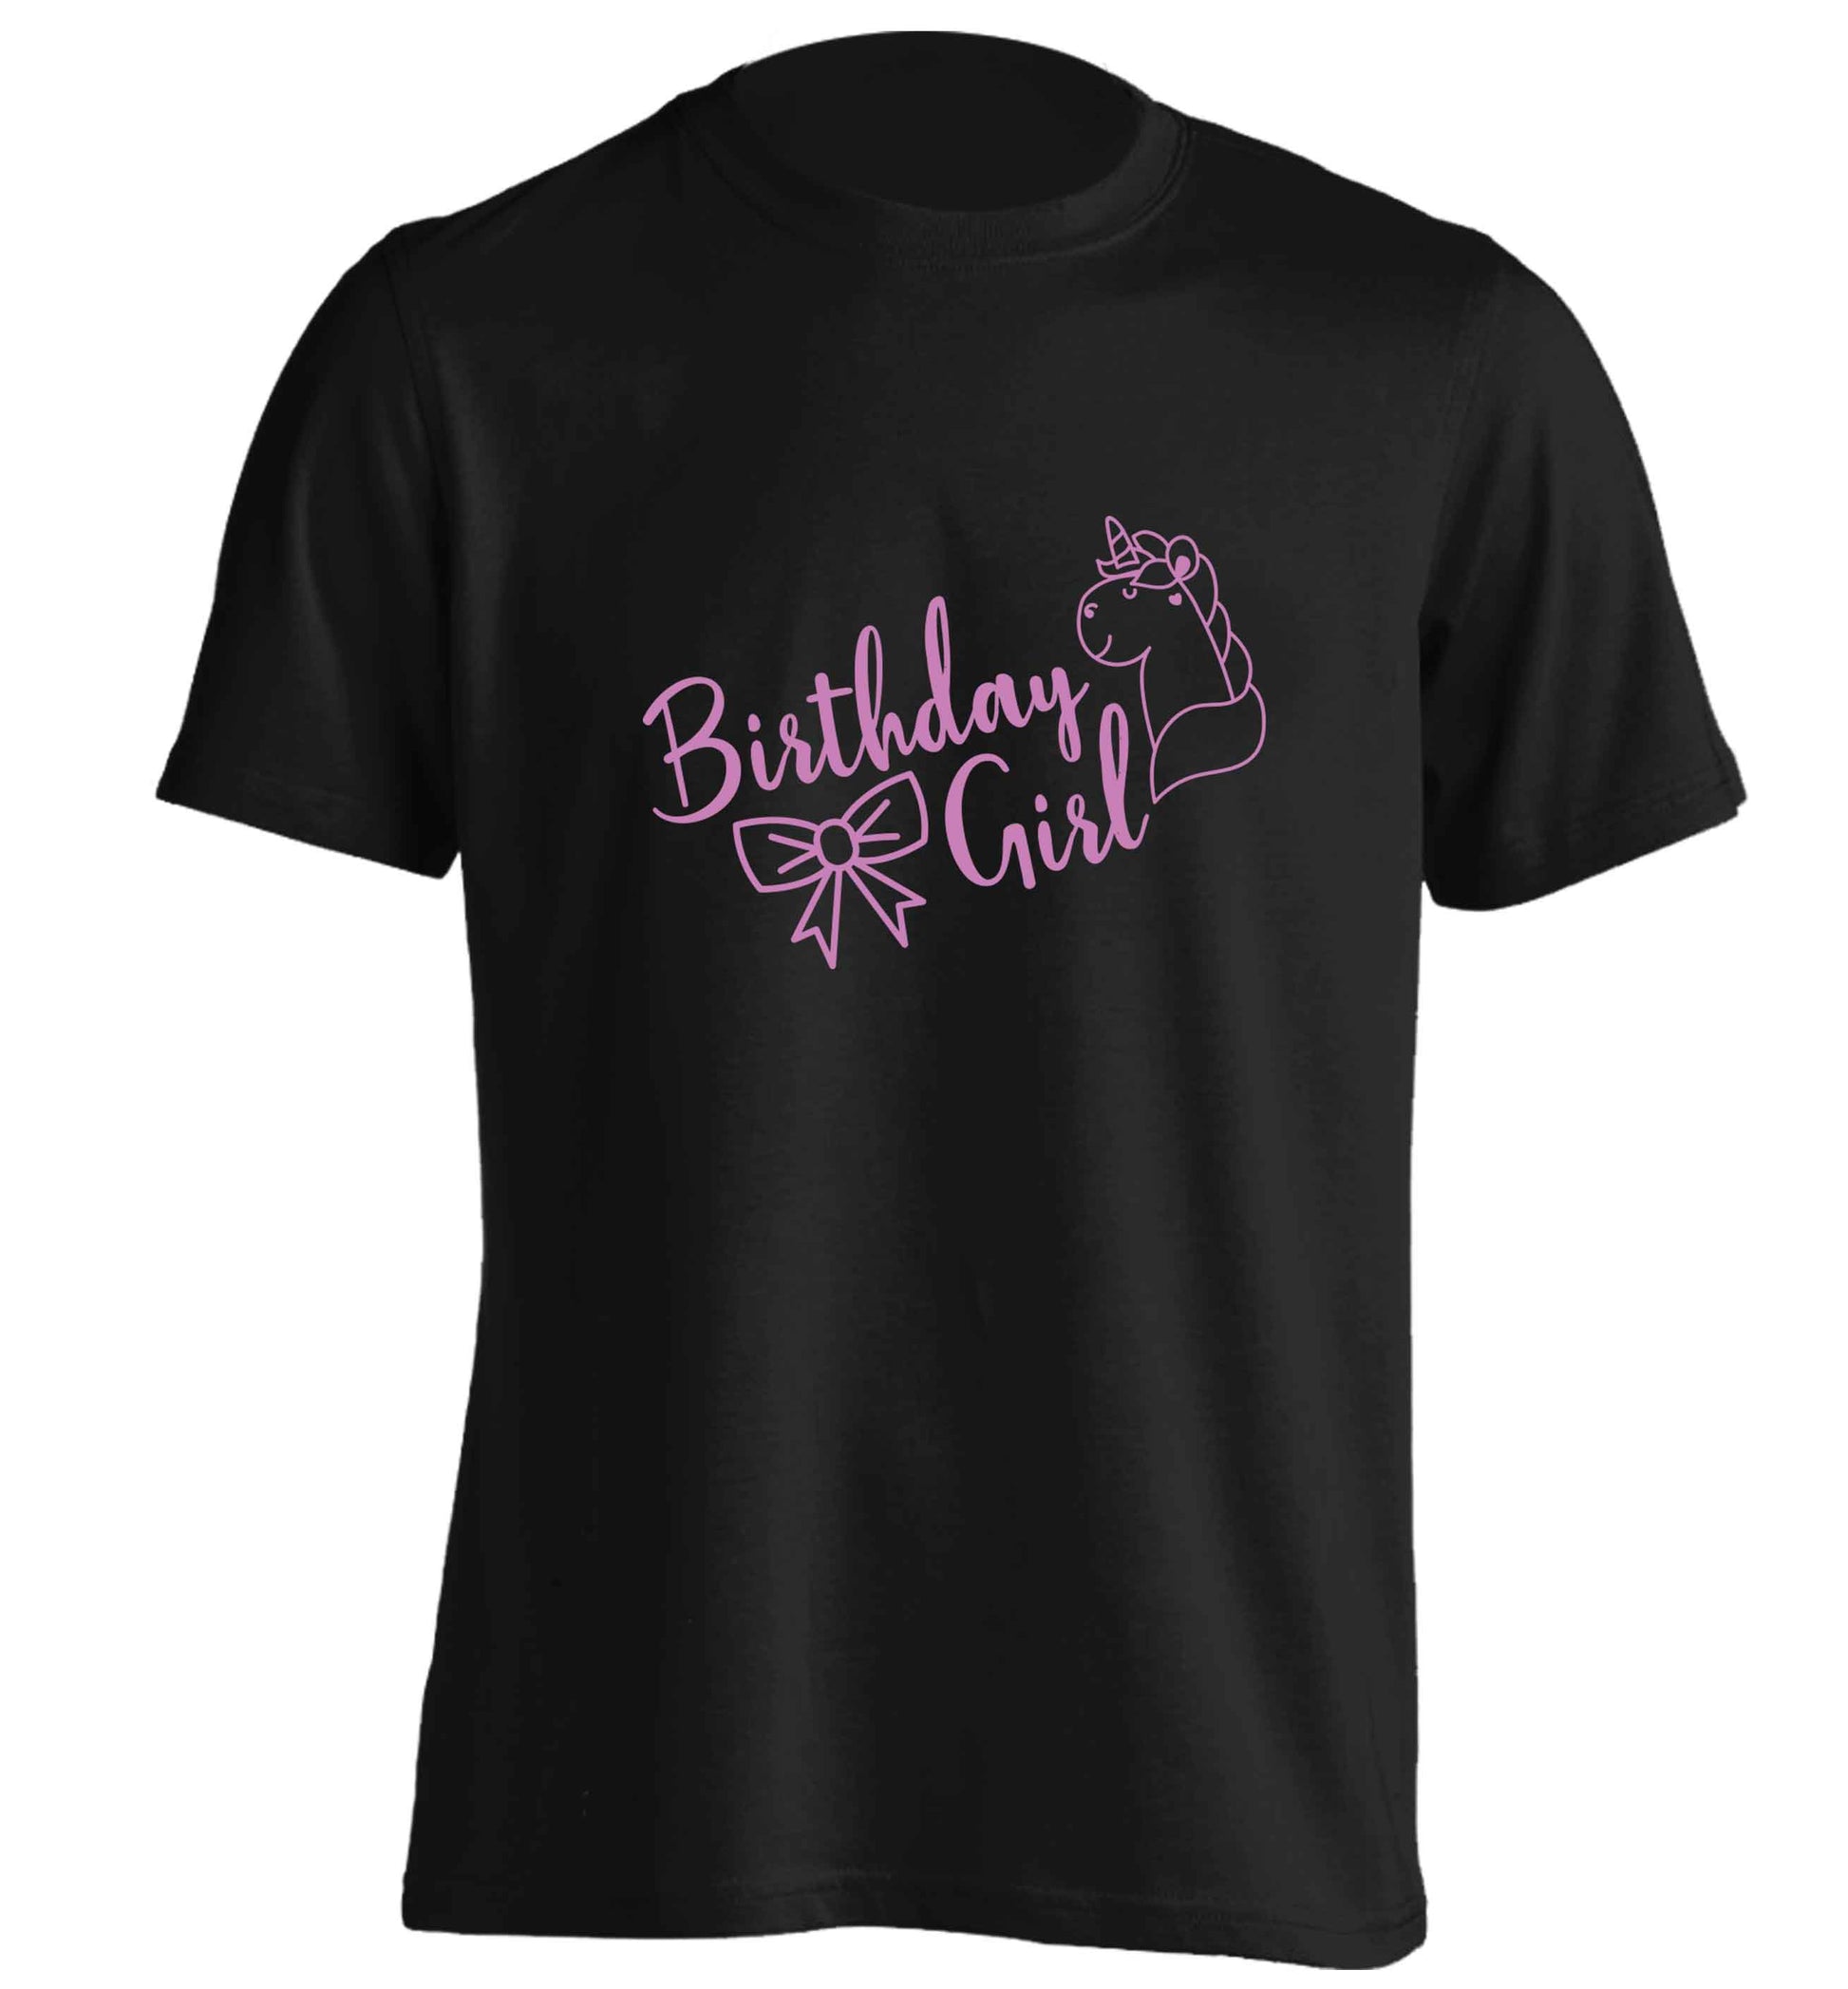 Birthday girl adults unisex black Tshirt 2XL